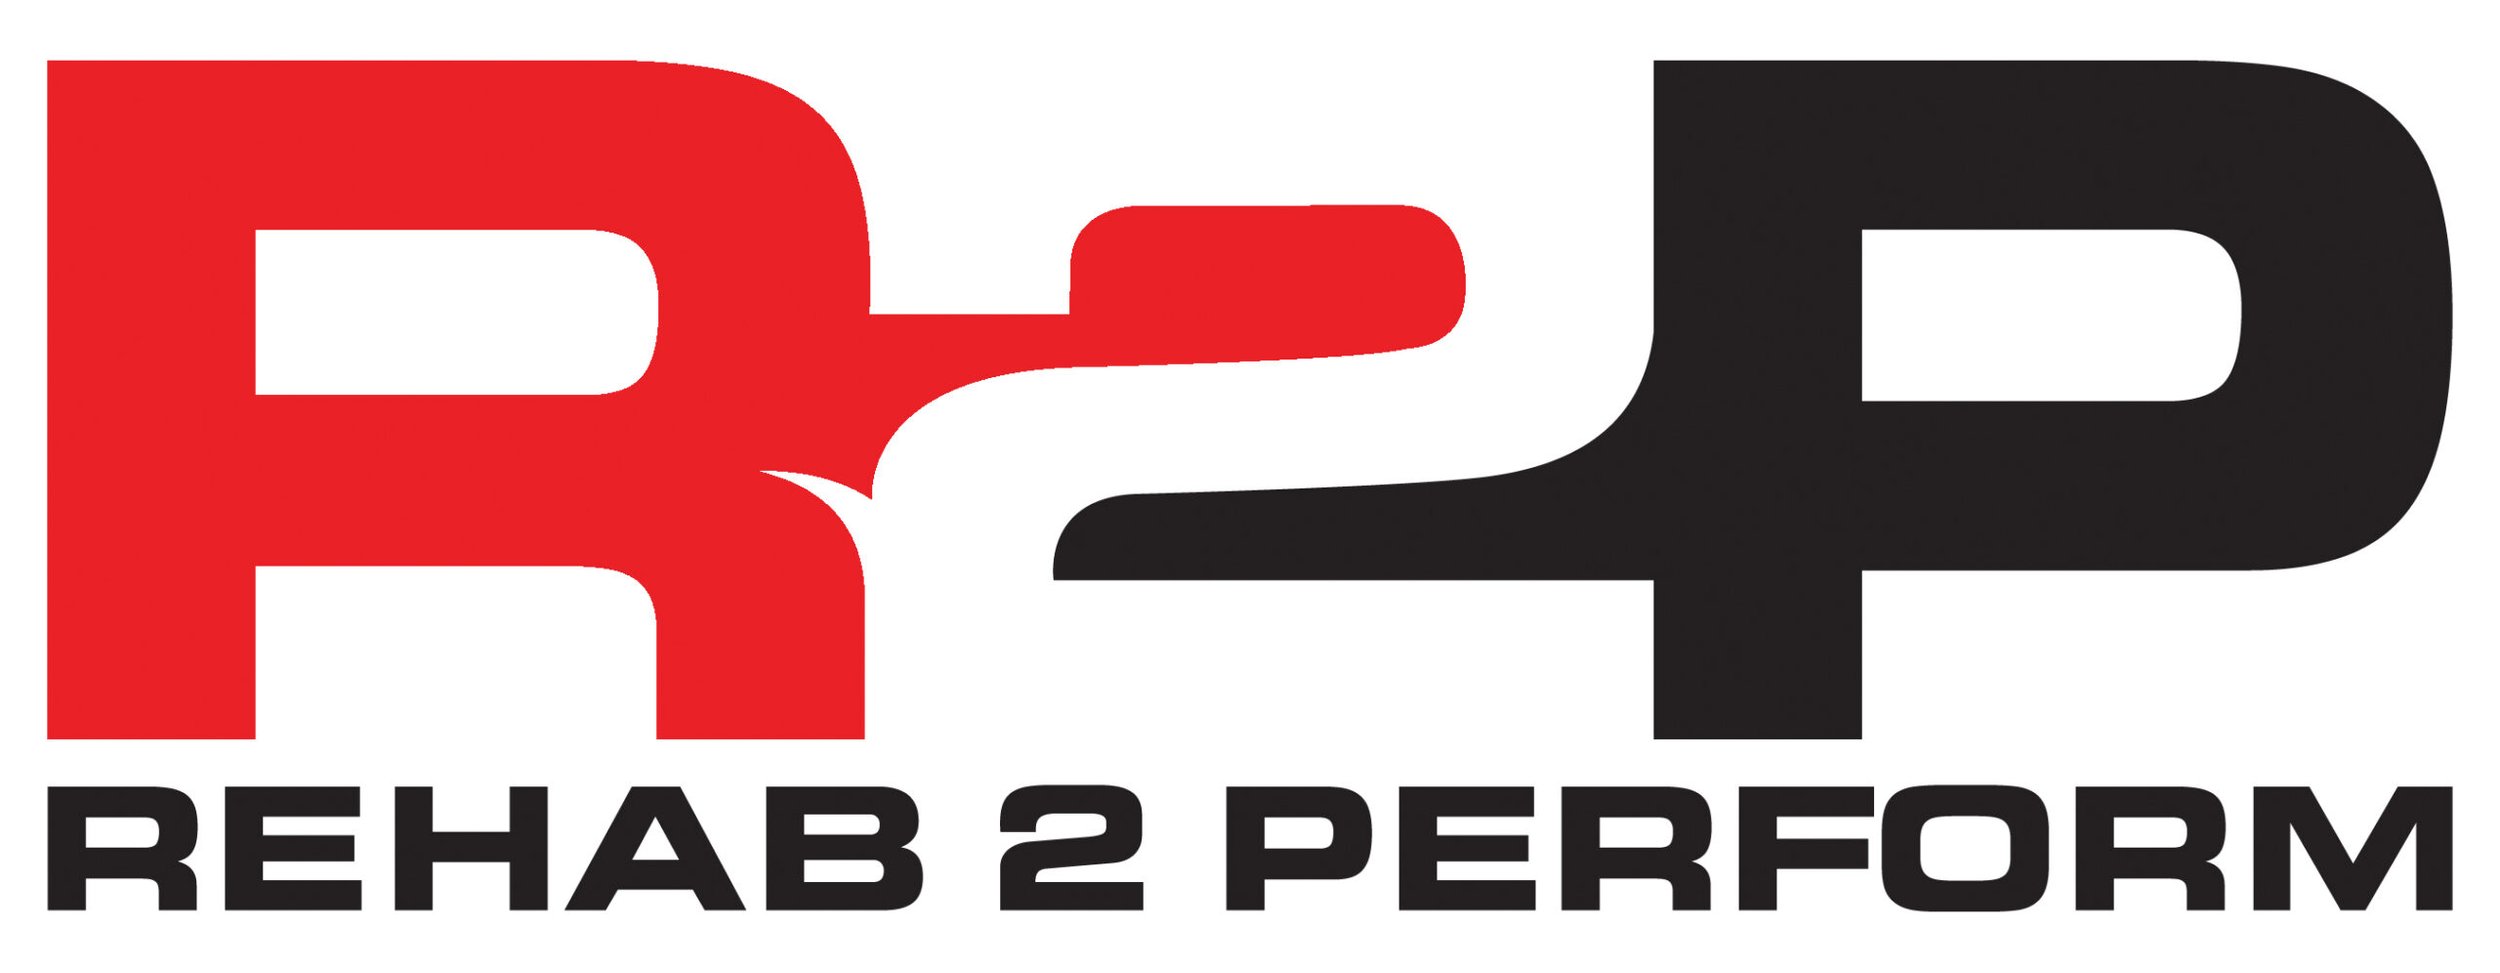 Sponsor - Rehab 2 Perform Logo.jpg